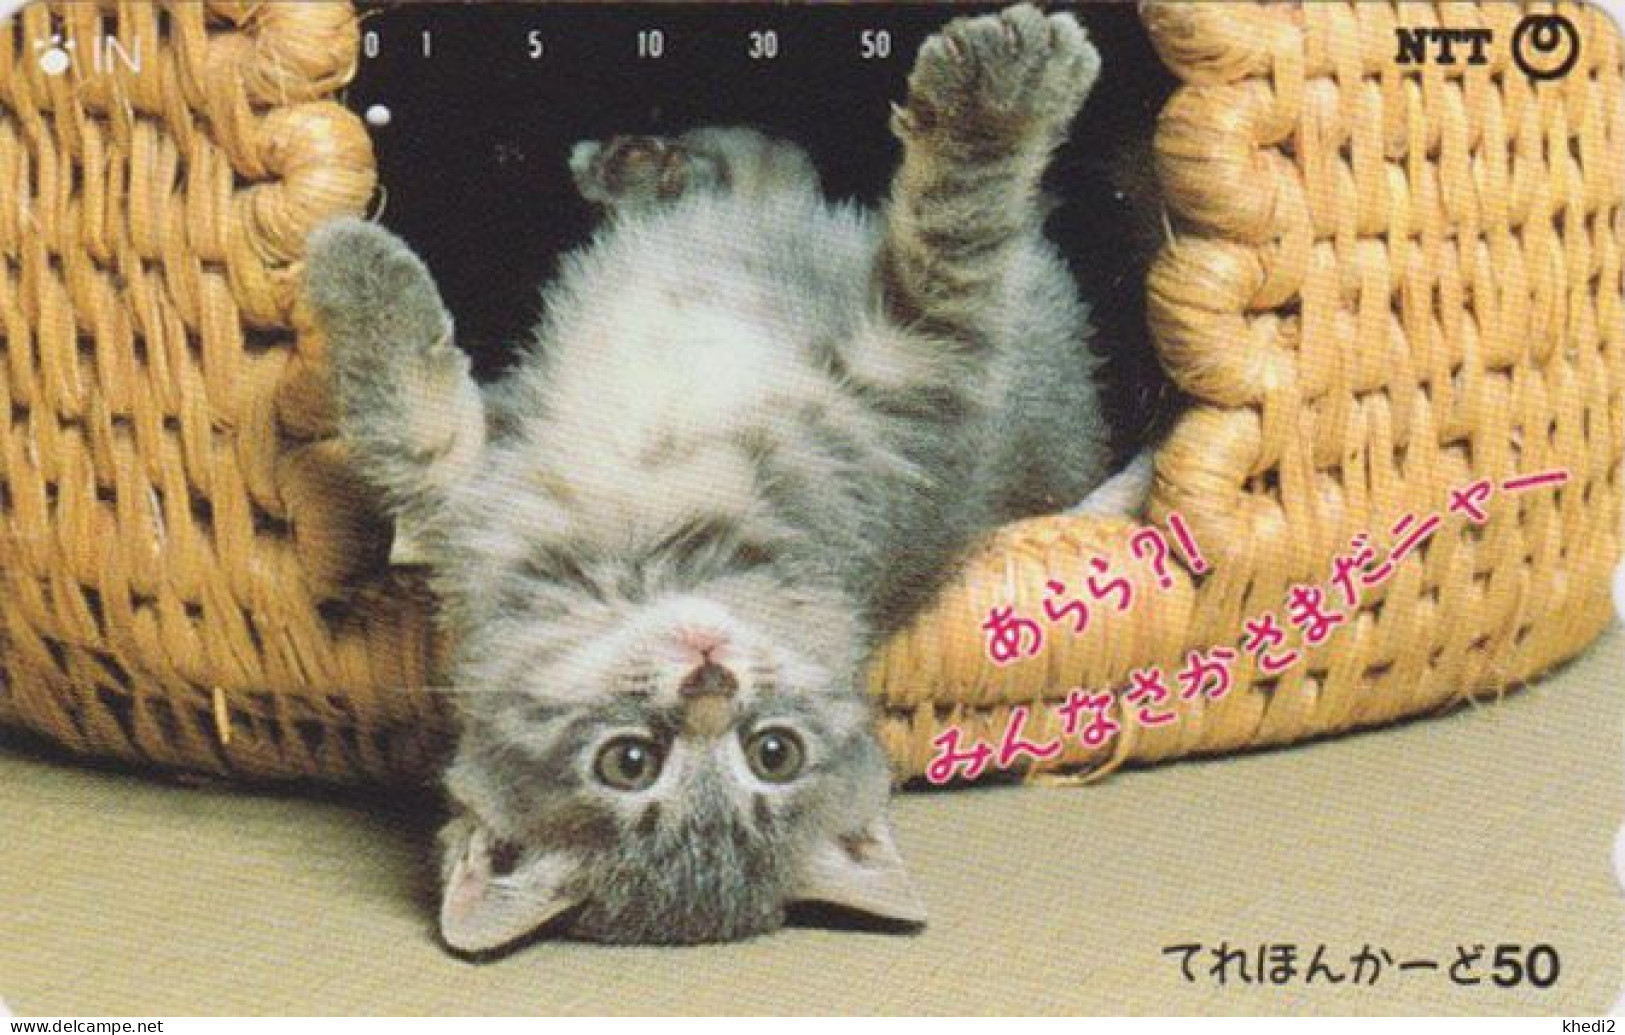 Télécarte JAPON / NTT 251-001 B ** 2 NOTCHES 1 PUNCH ** - ANIMAL CHAT - CAT JAPAN Phonecard - Gatos